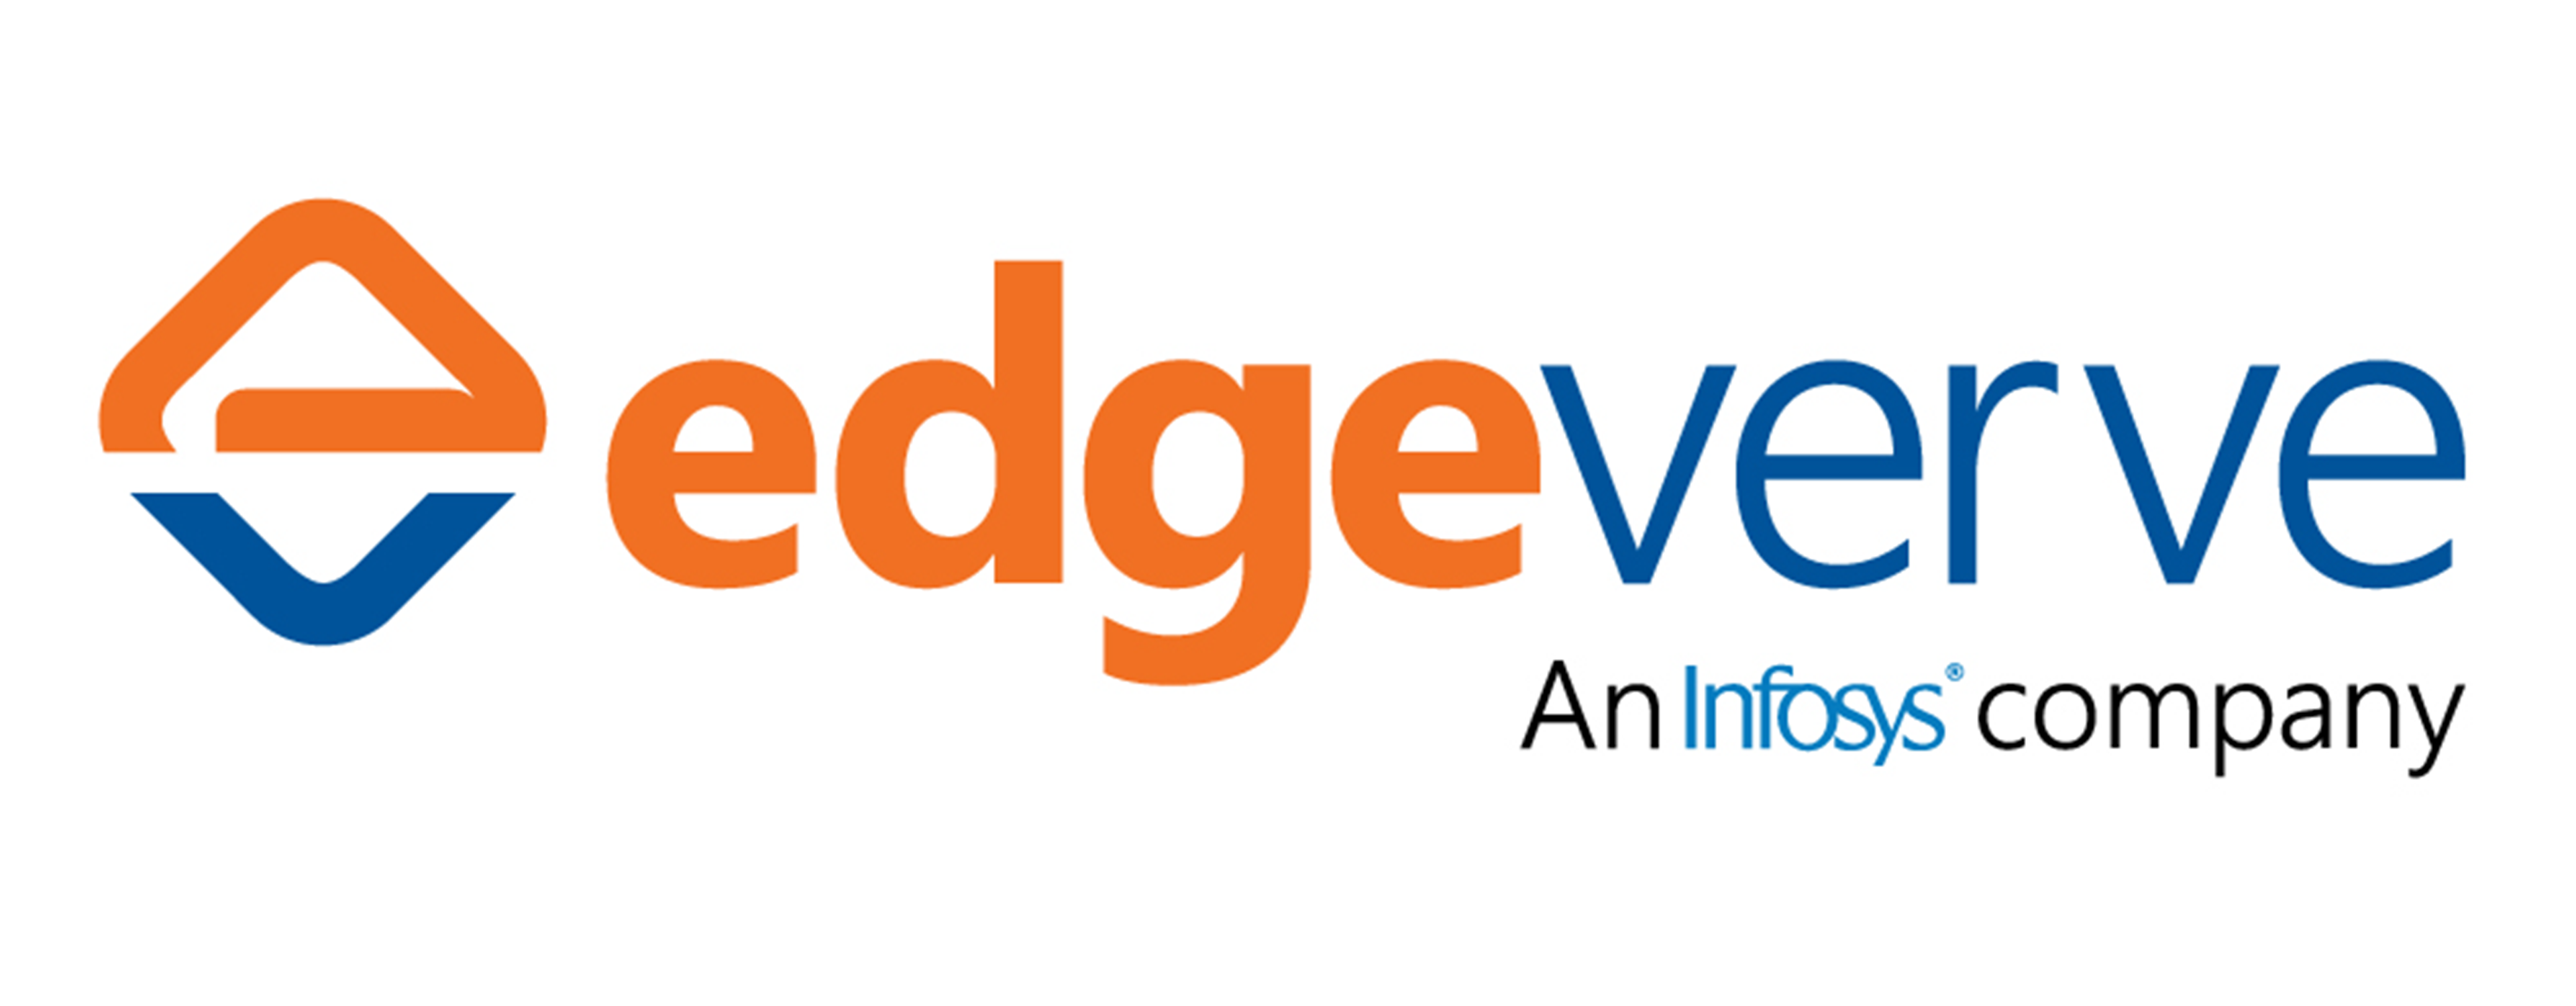             EdgeVerve-Logo        